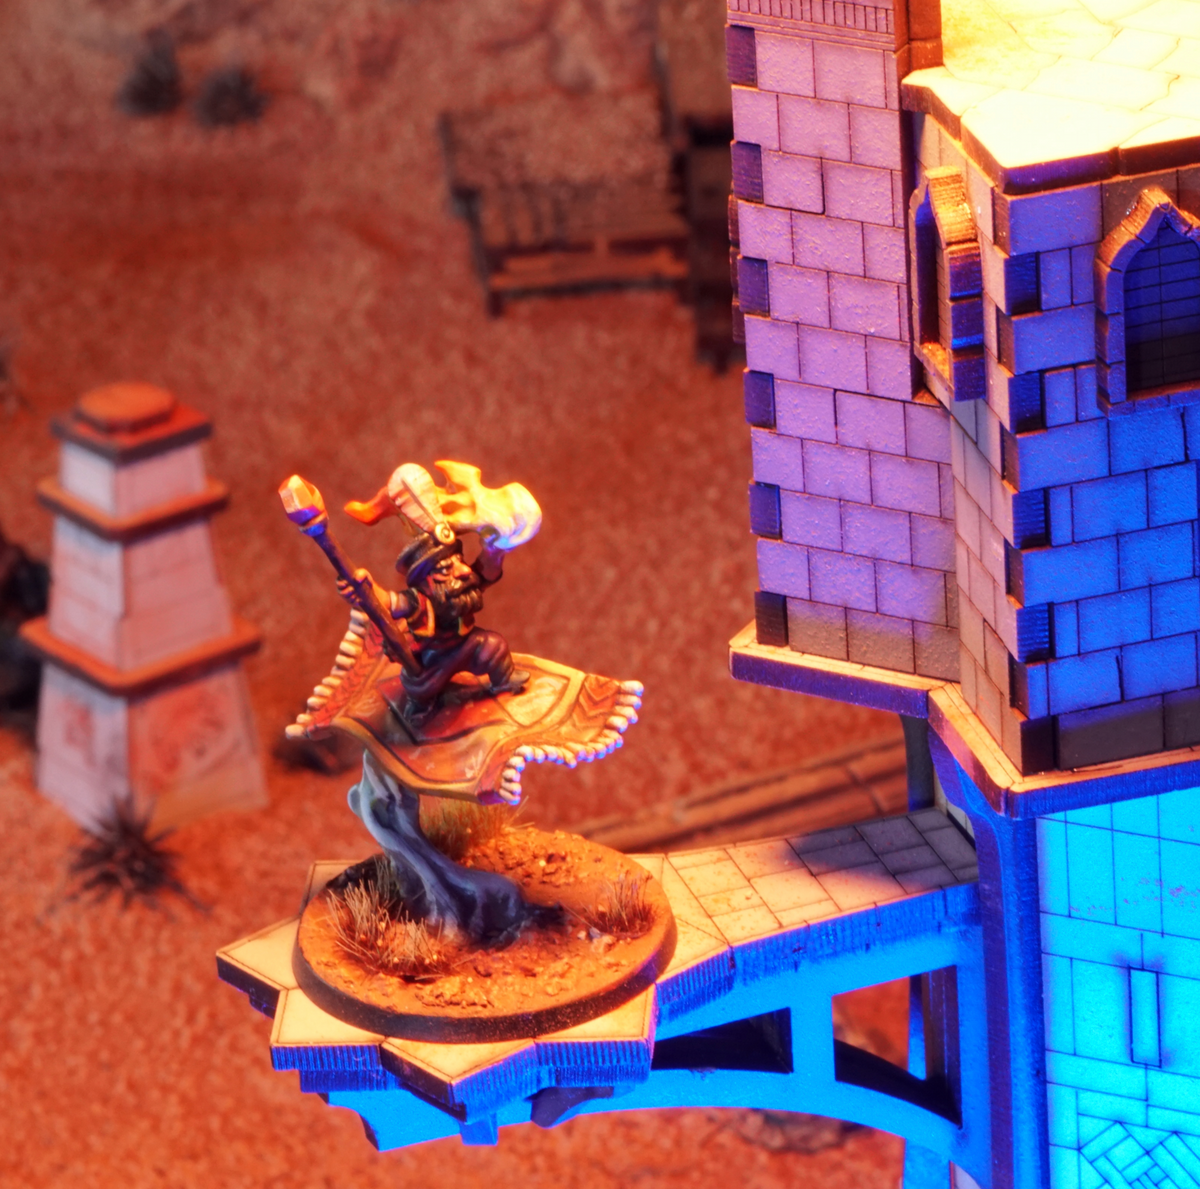 Gnome Magister on Magic Carpet Miniature Metal King Studio Exit 23 Games Gnome Magister on Magic Carpet